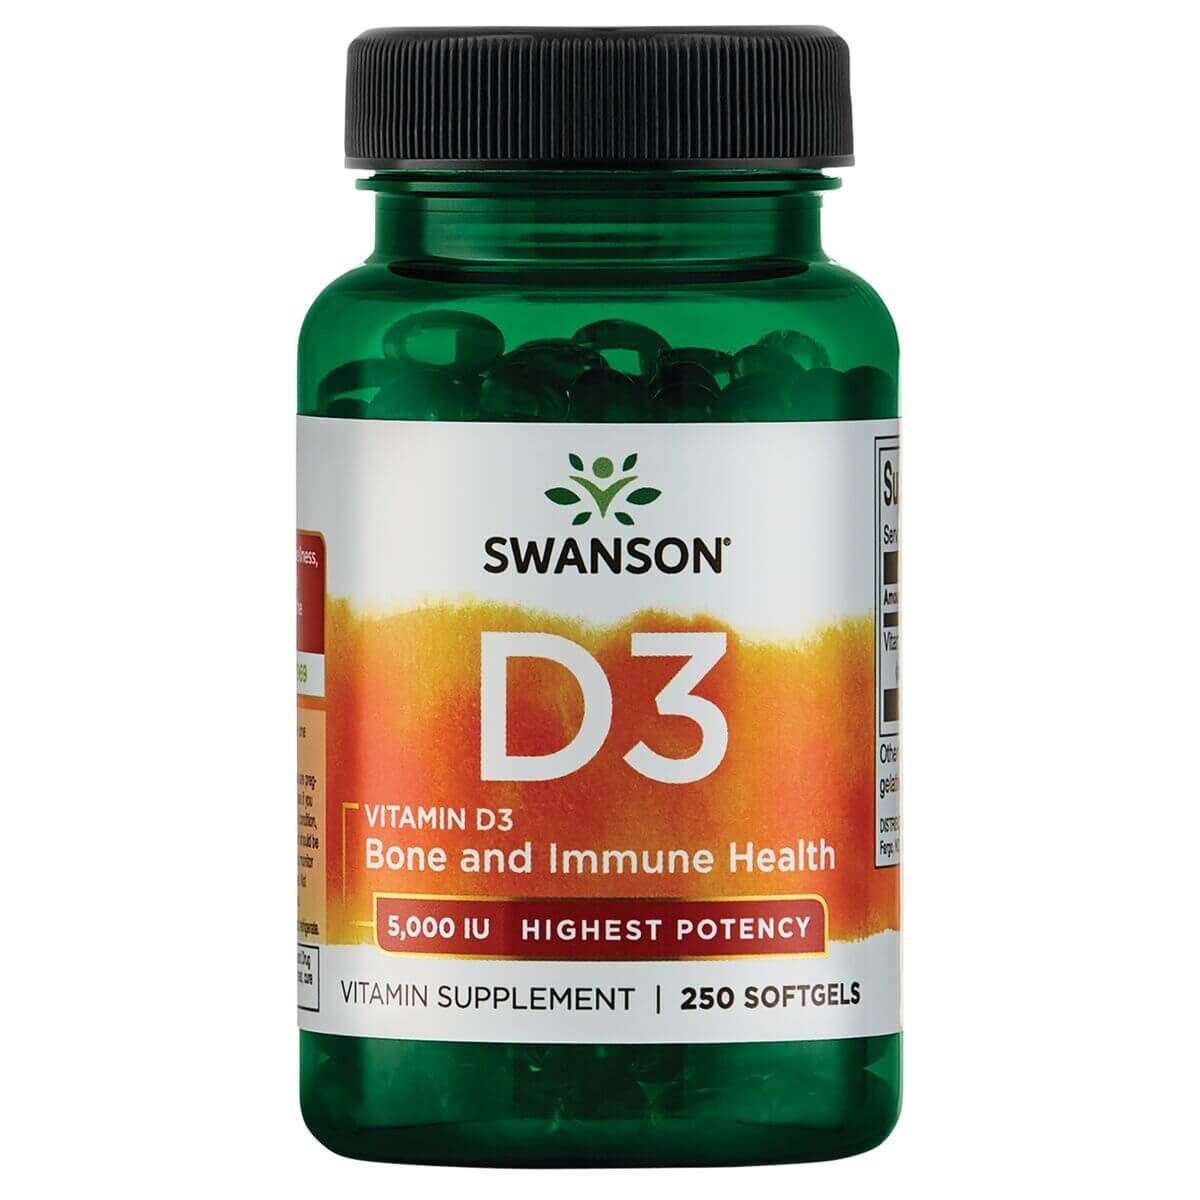 Swanson Vitamin D3 Highest Potency 5,000 IU (125 mcg) 250 Softgels at MySupplementShop.co.uk